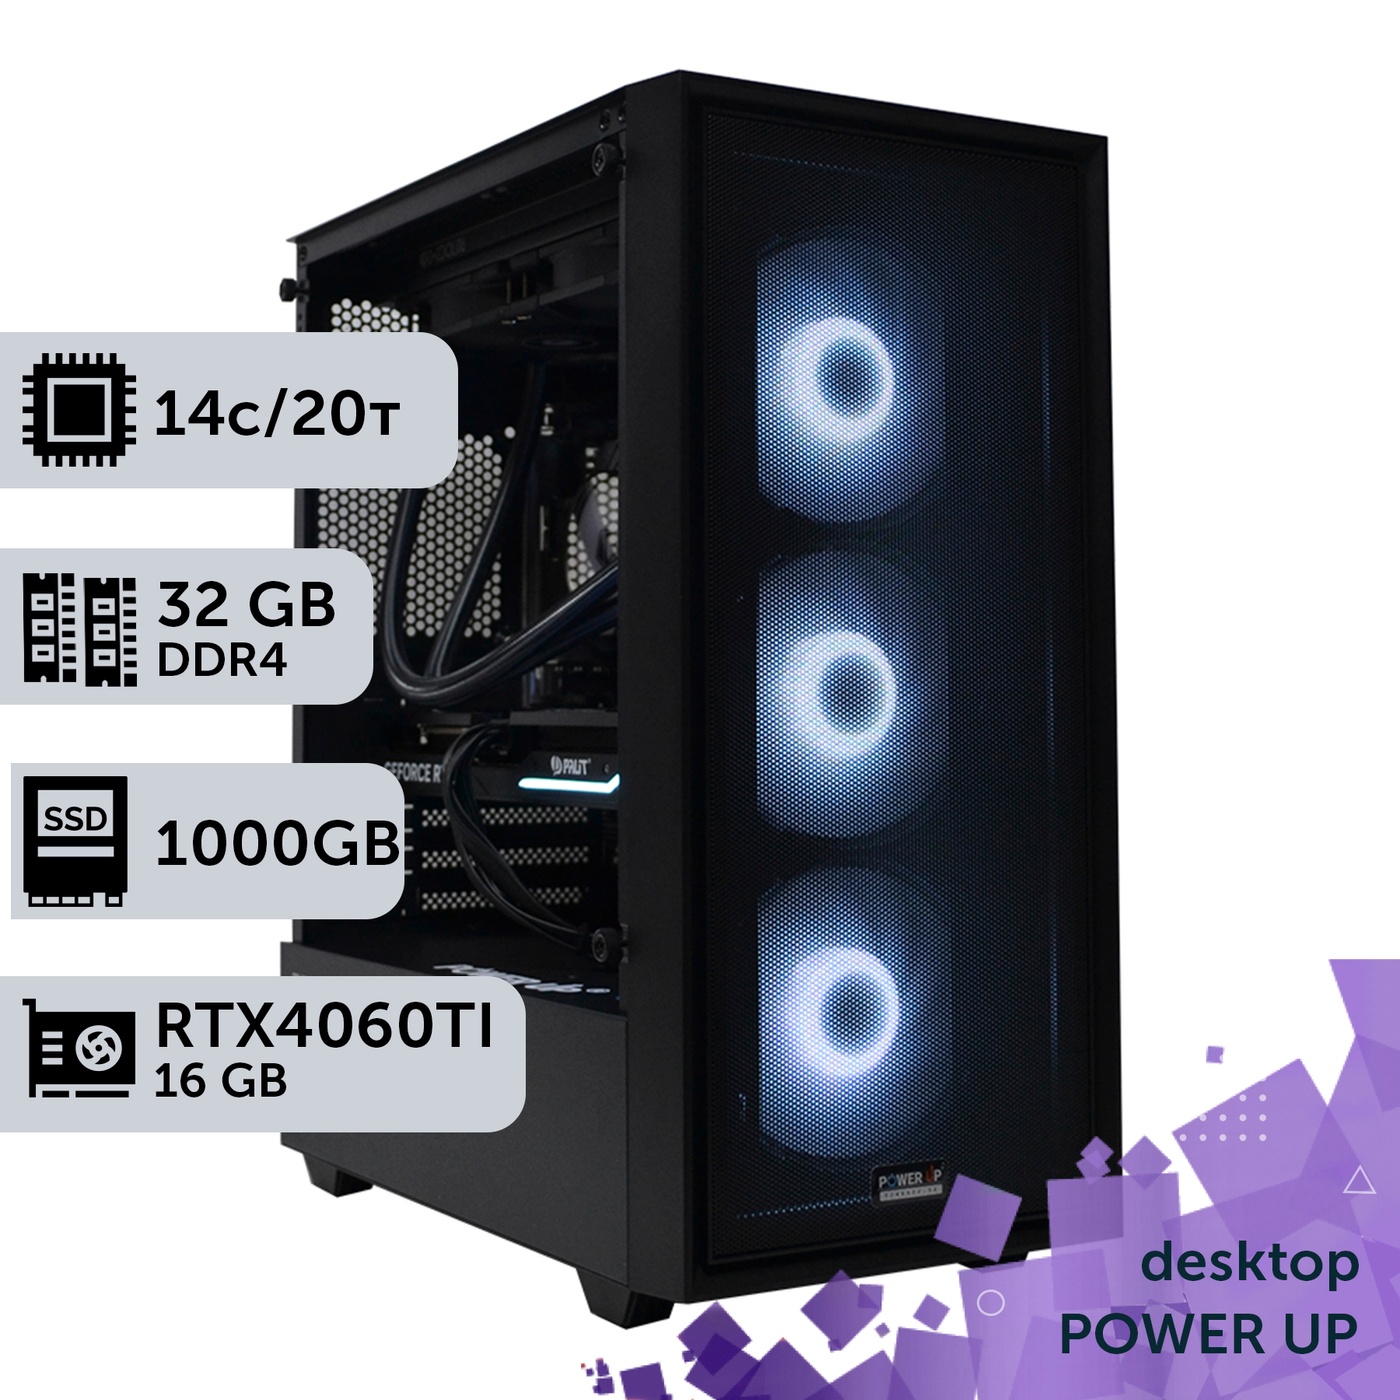 Рабочая станция PowerUp Desktop #284 Core i5 13600K/32 GB/SSD 1TB/GeForce RTX 4060Ti 16GB